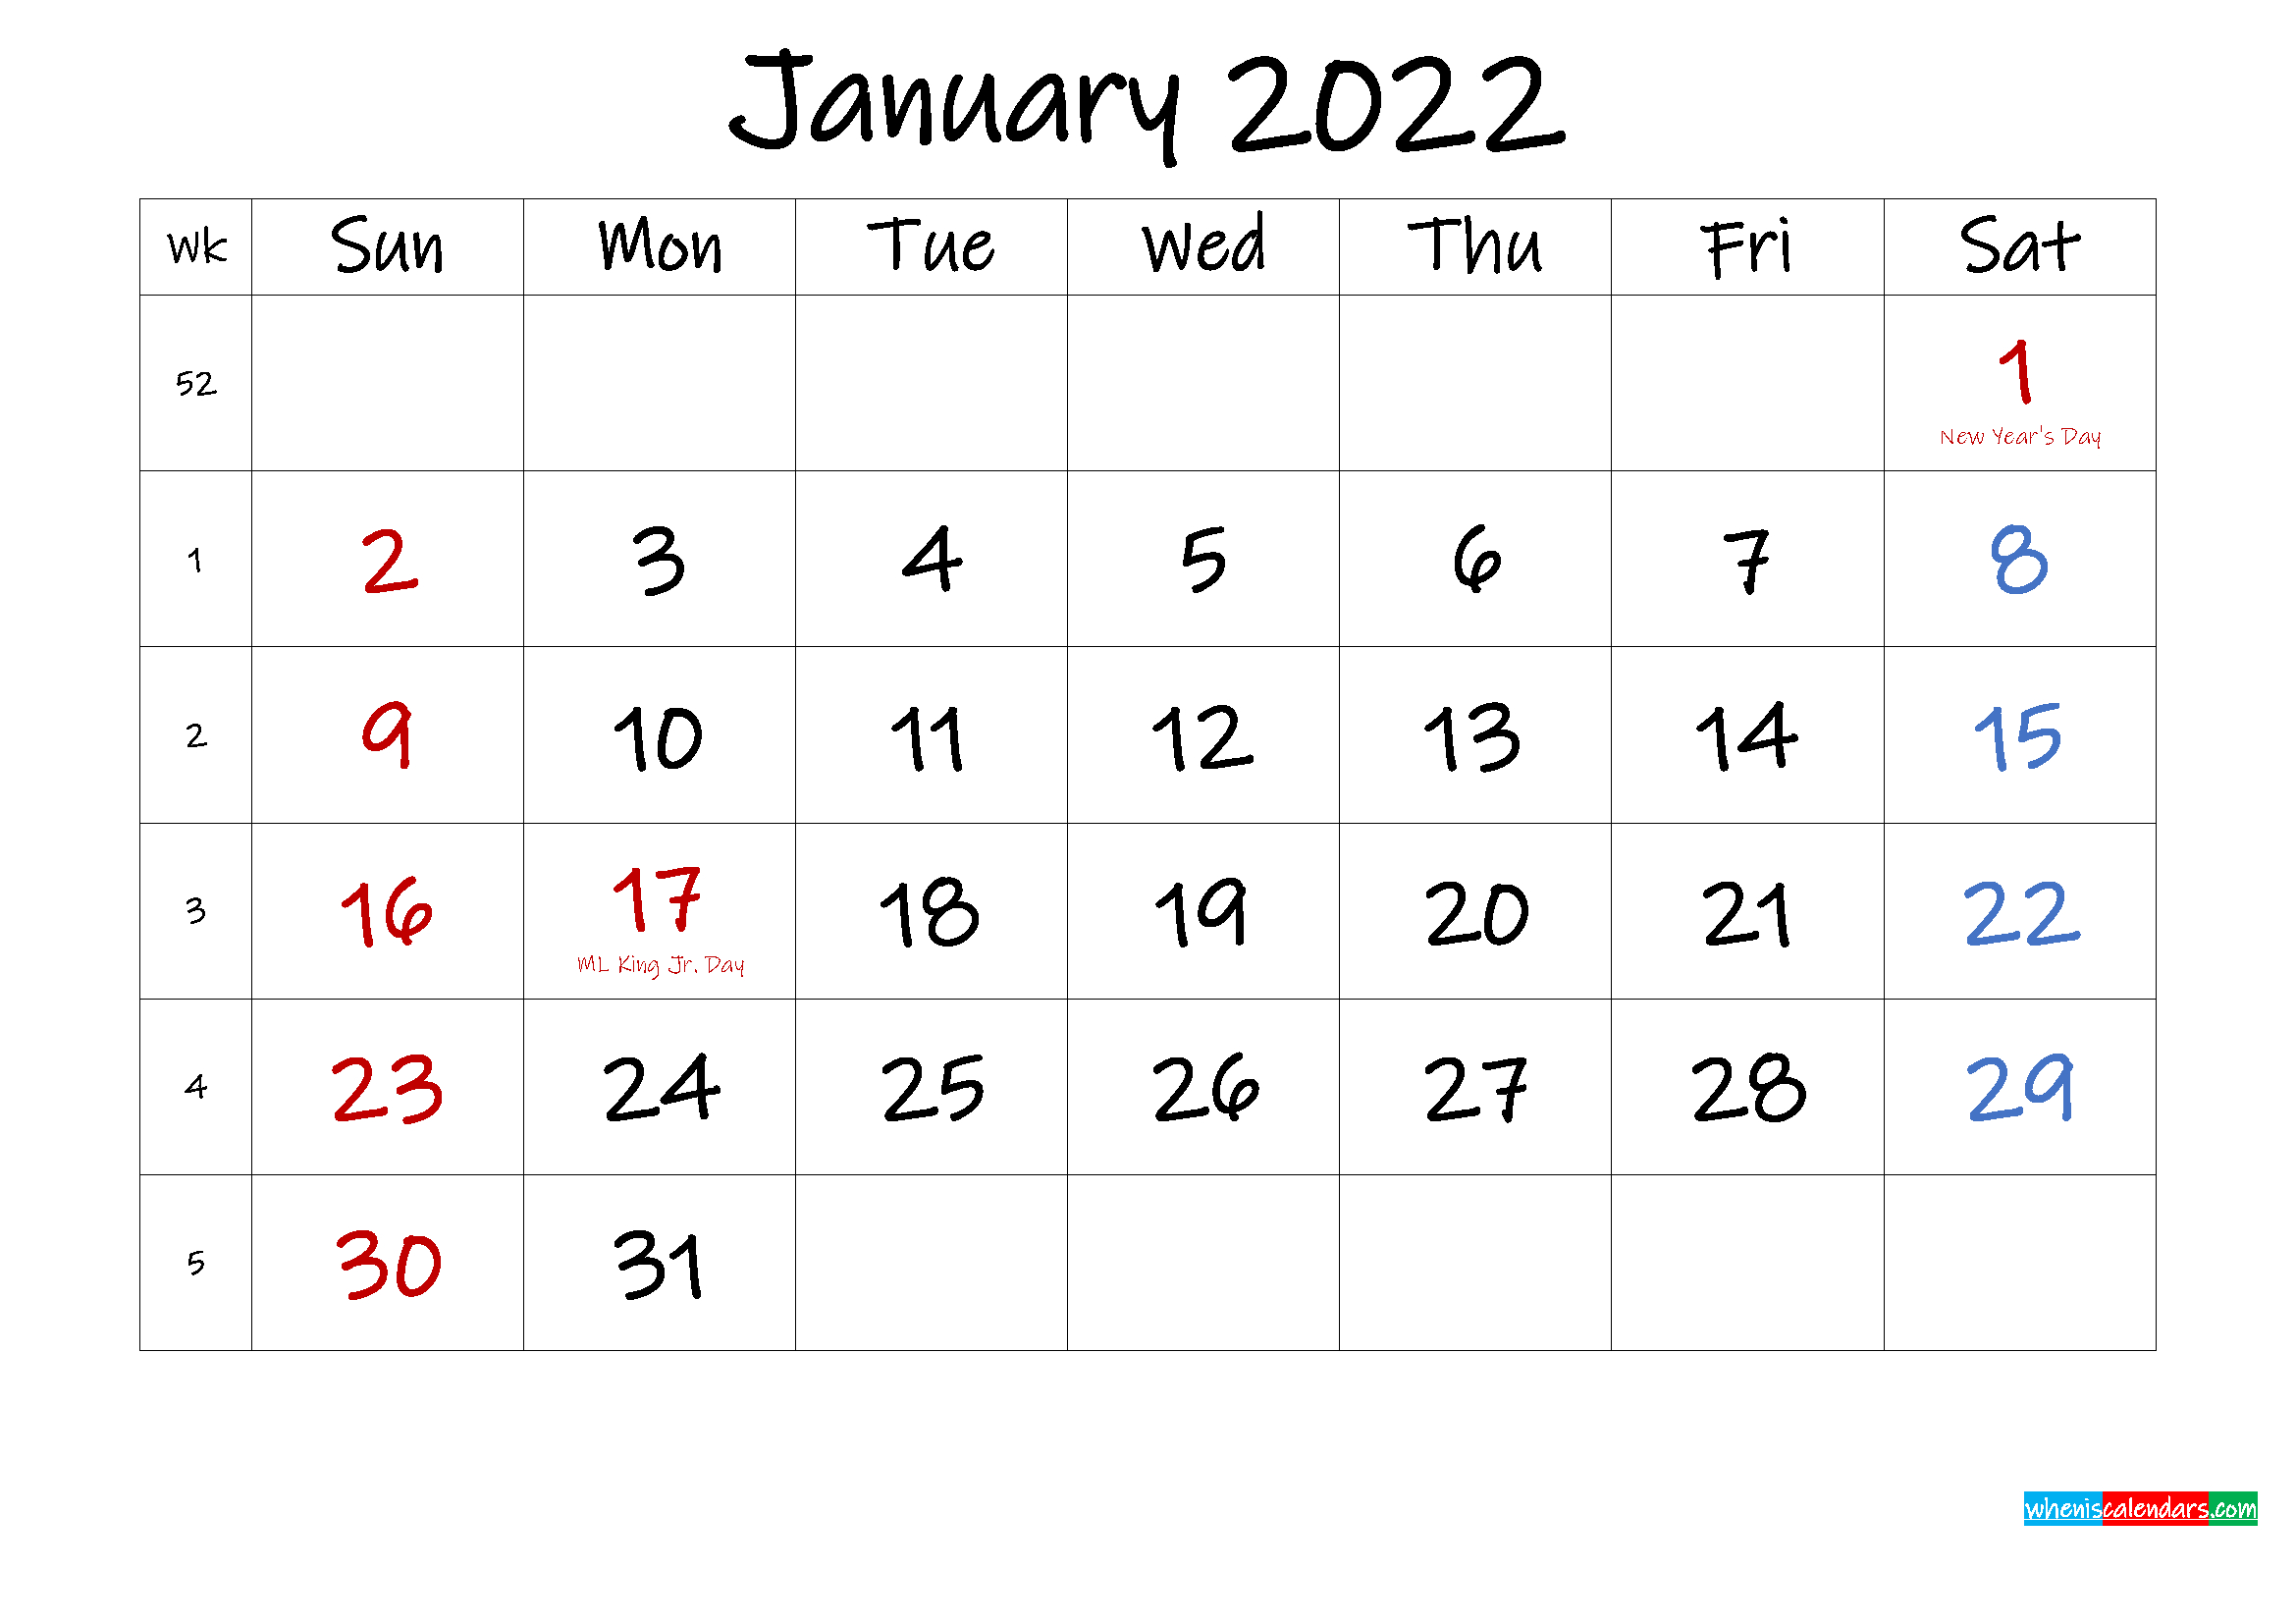 January 2022 Free Printable Calendar With Holidays  December 2022 Calendar And January 2022 Calendar